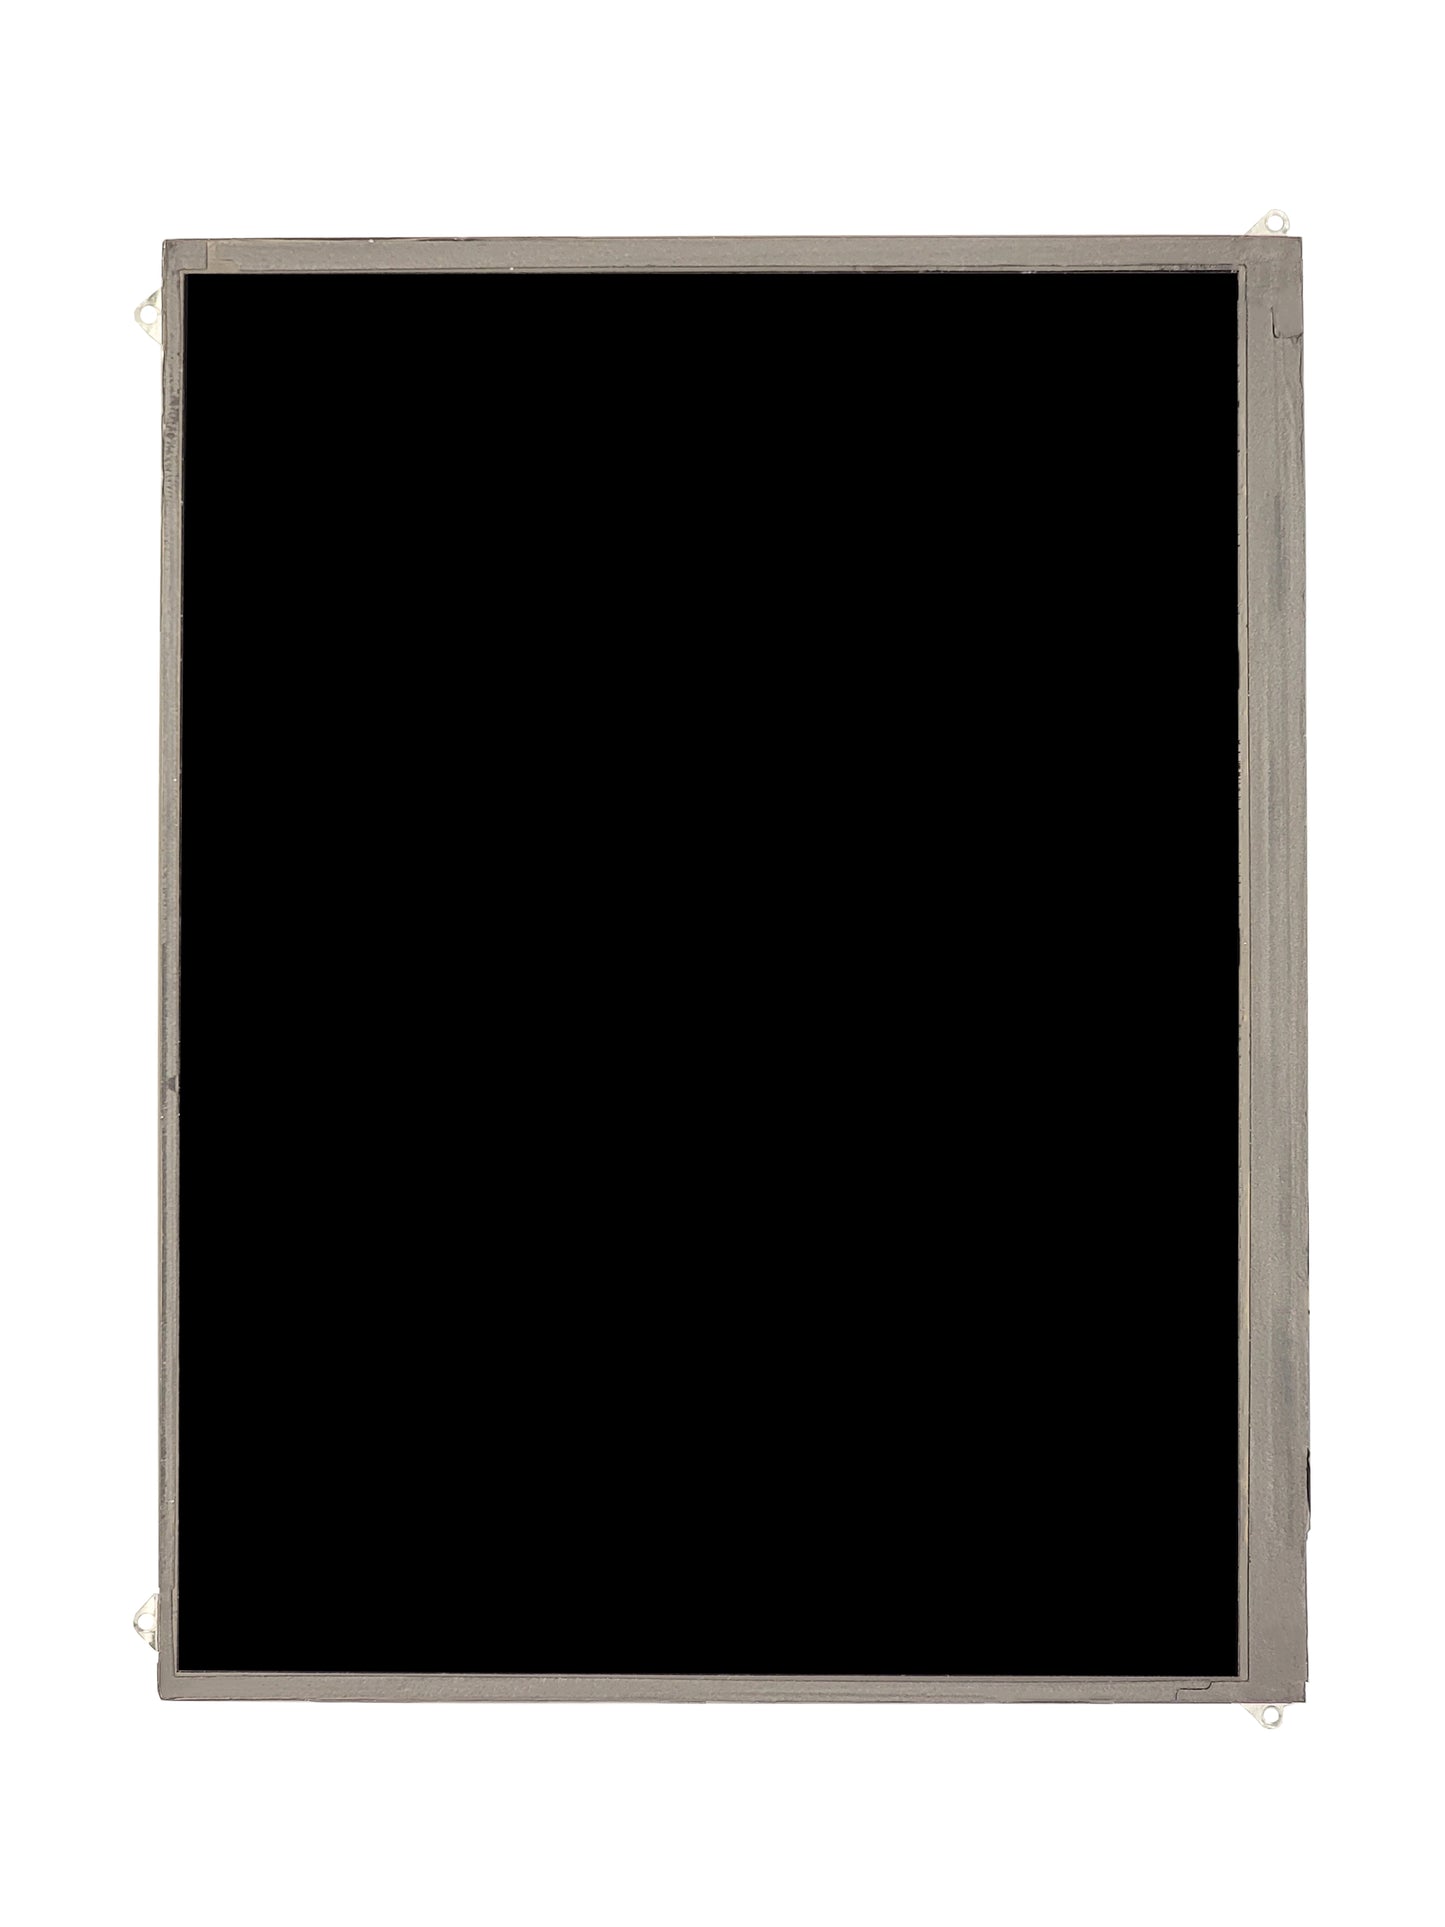 iPad 2 LCD Only (Refurbished)